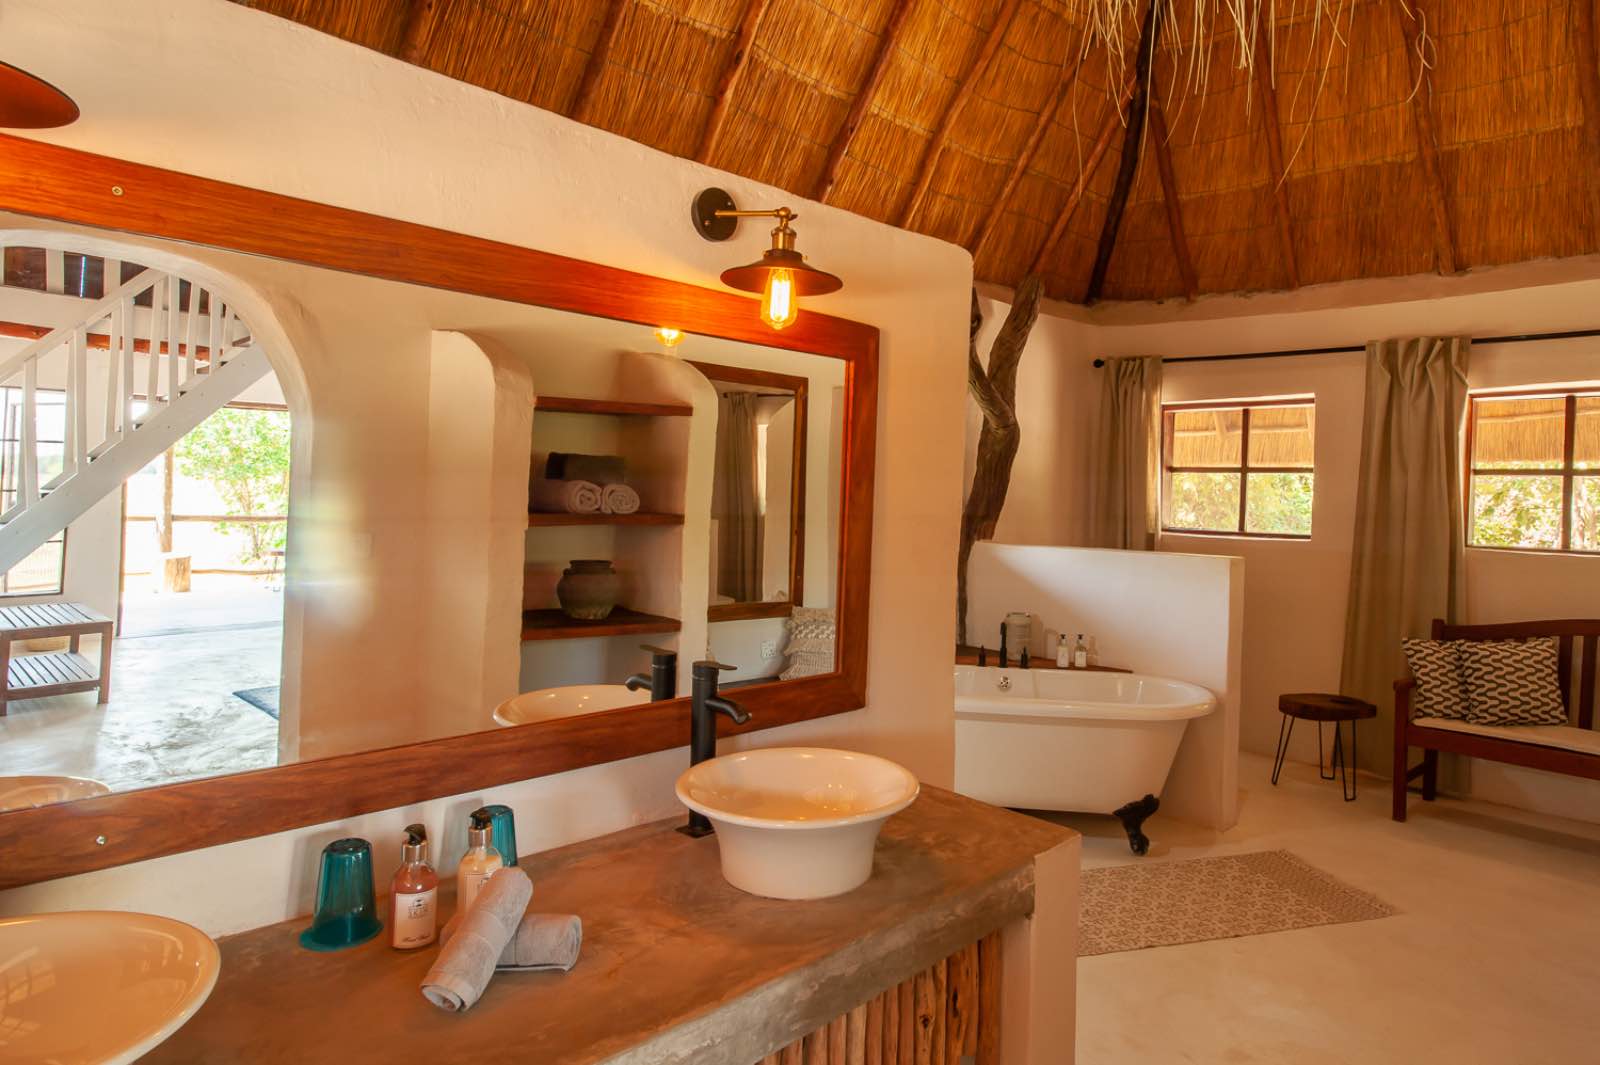 Luxury suite bathroom and free-standing bath tub